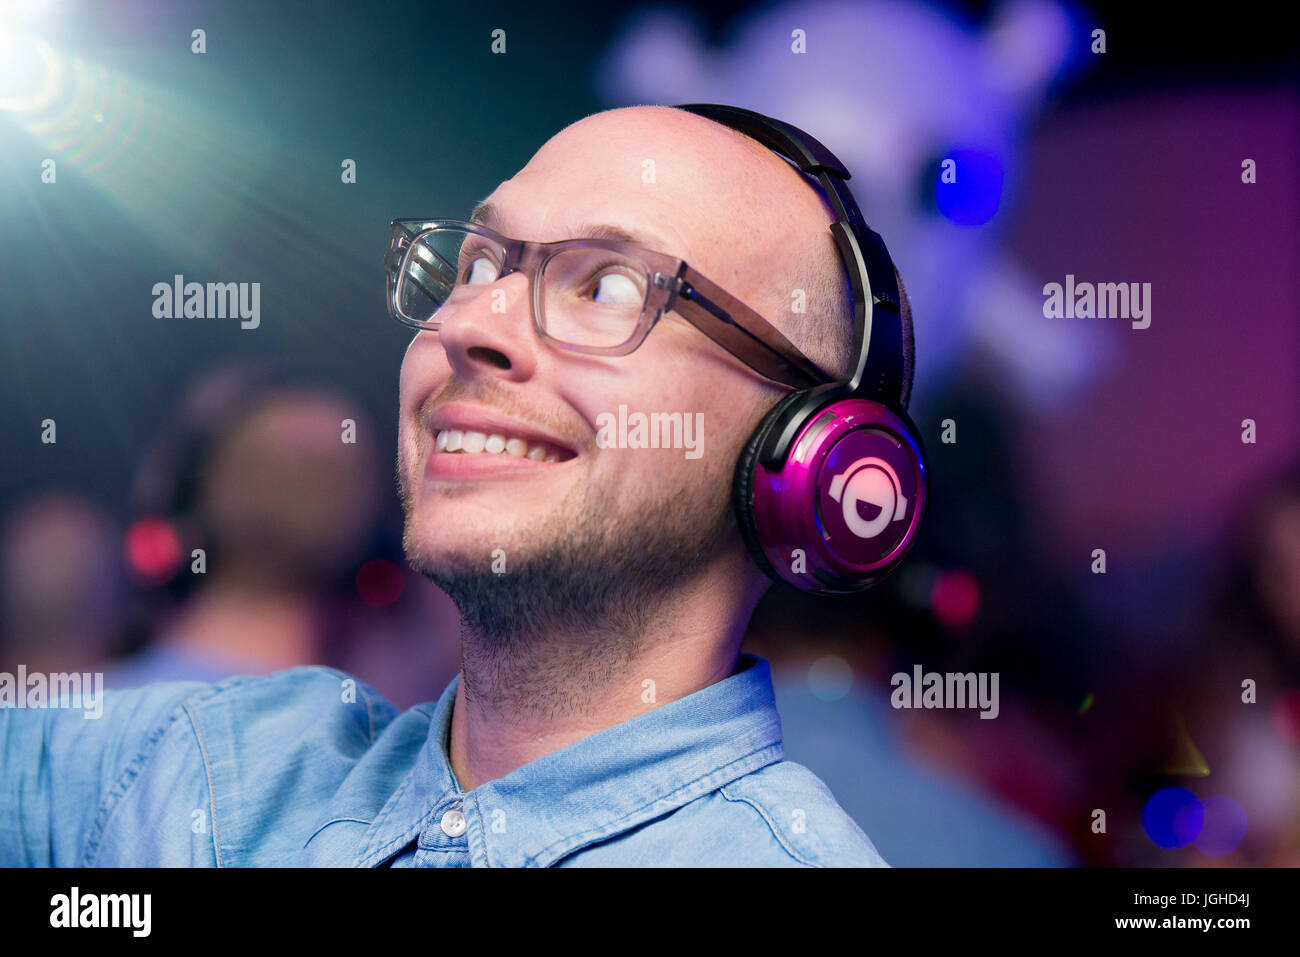 Man enjoys music on his headphones during a silent disco Stock Photo